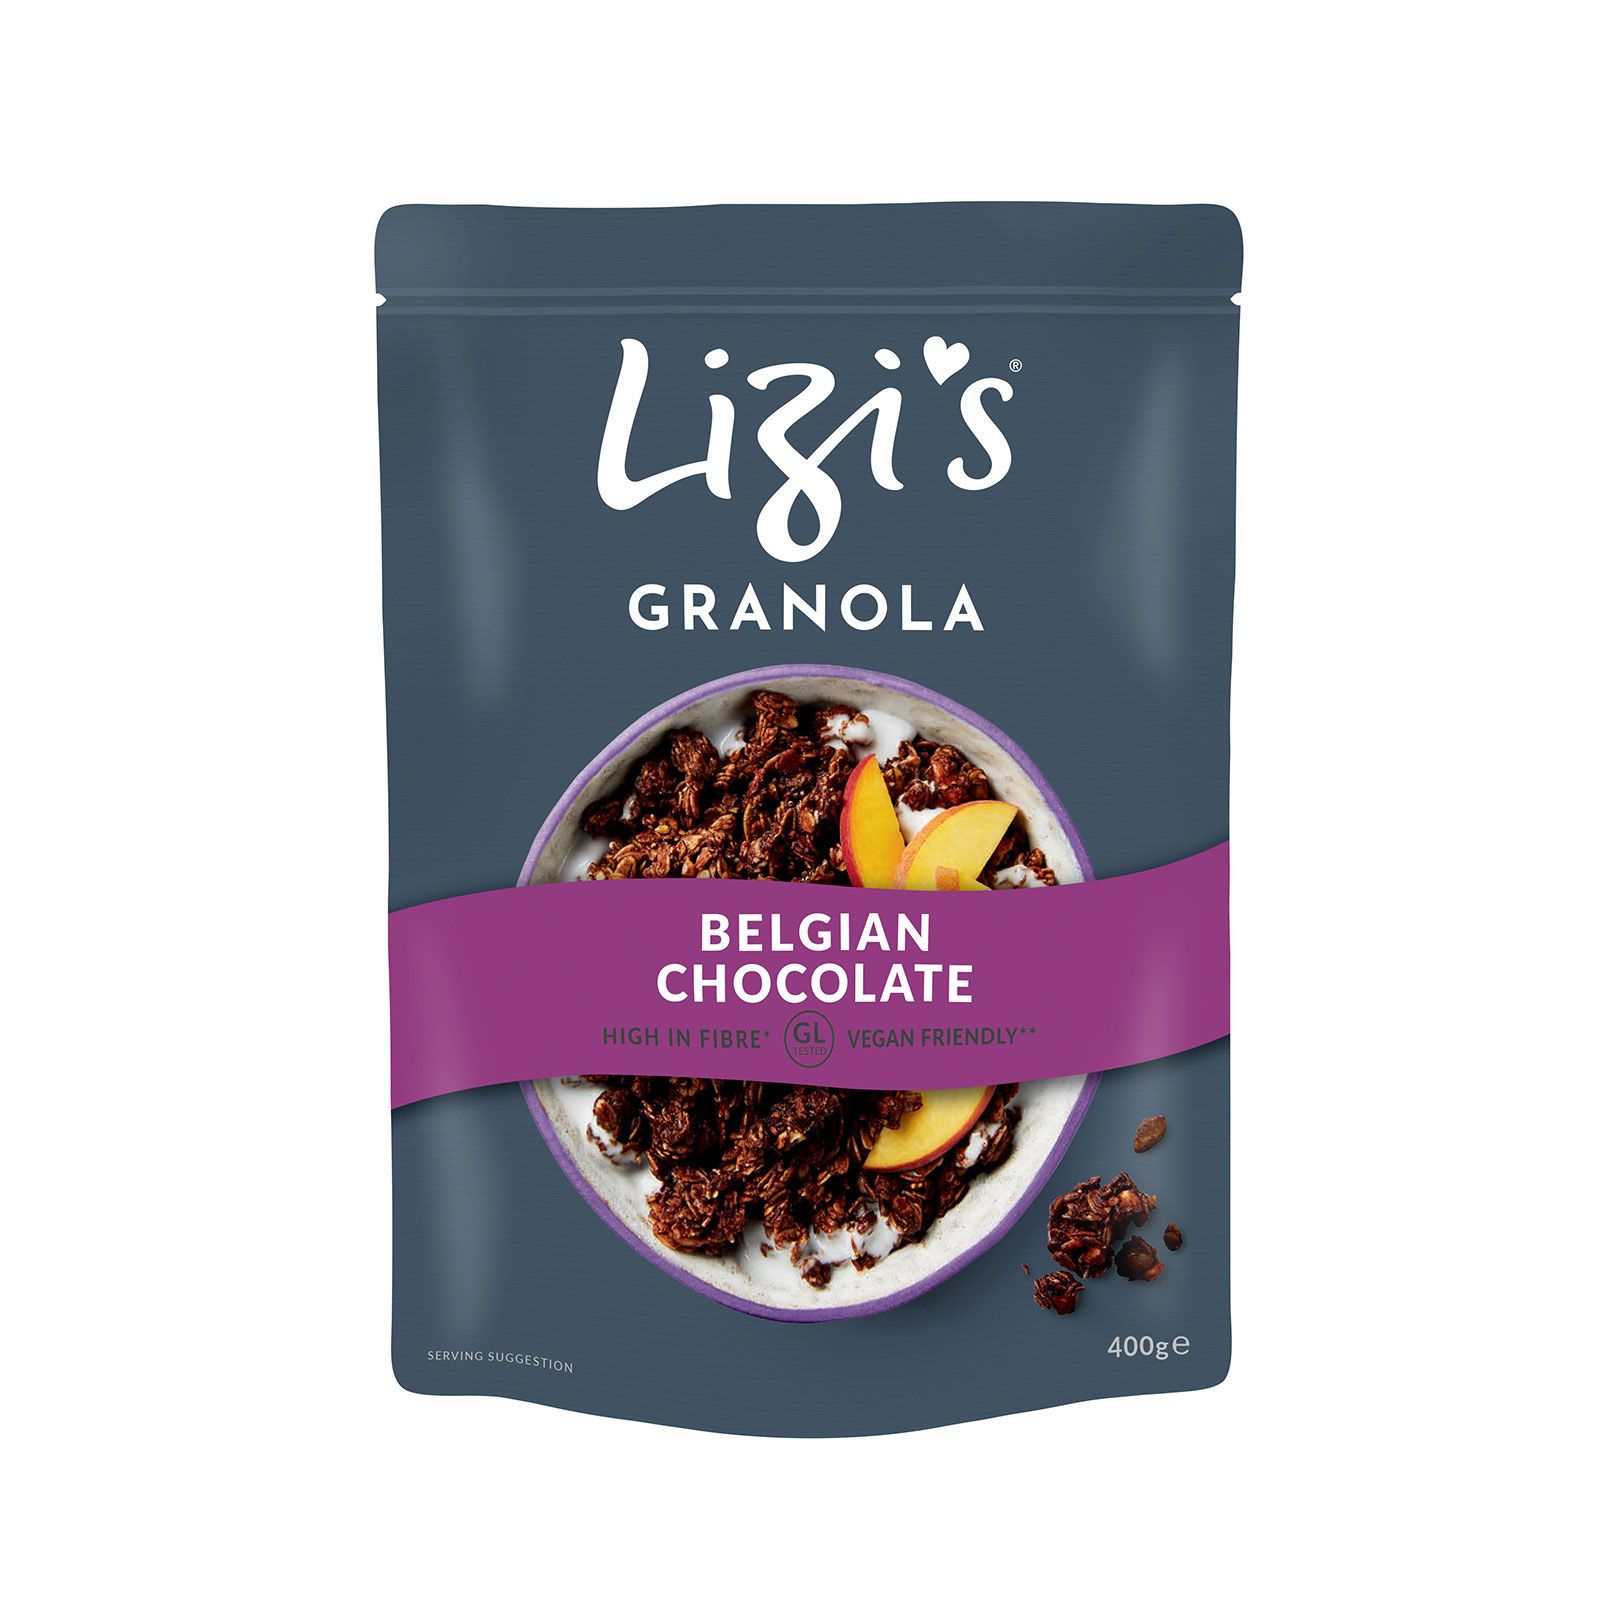 Belgian Chocolate Granola - Image